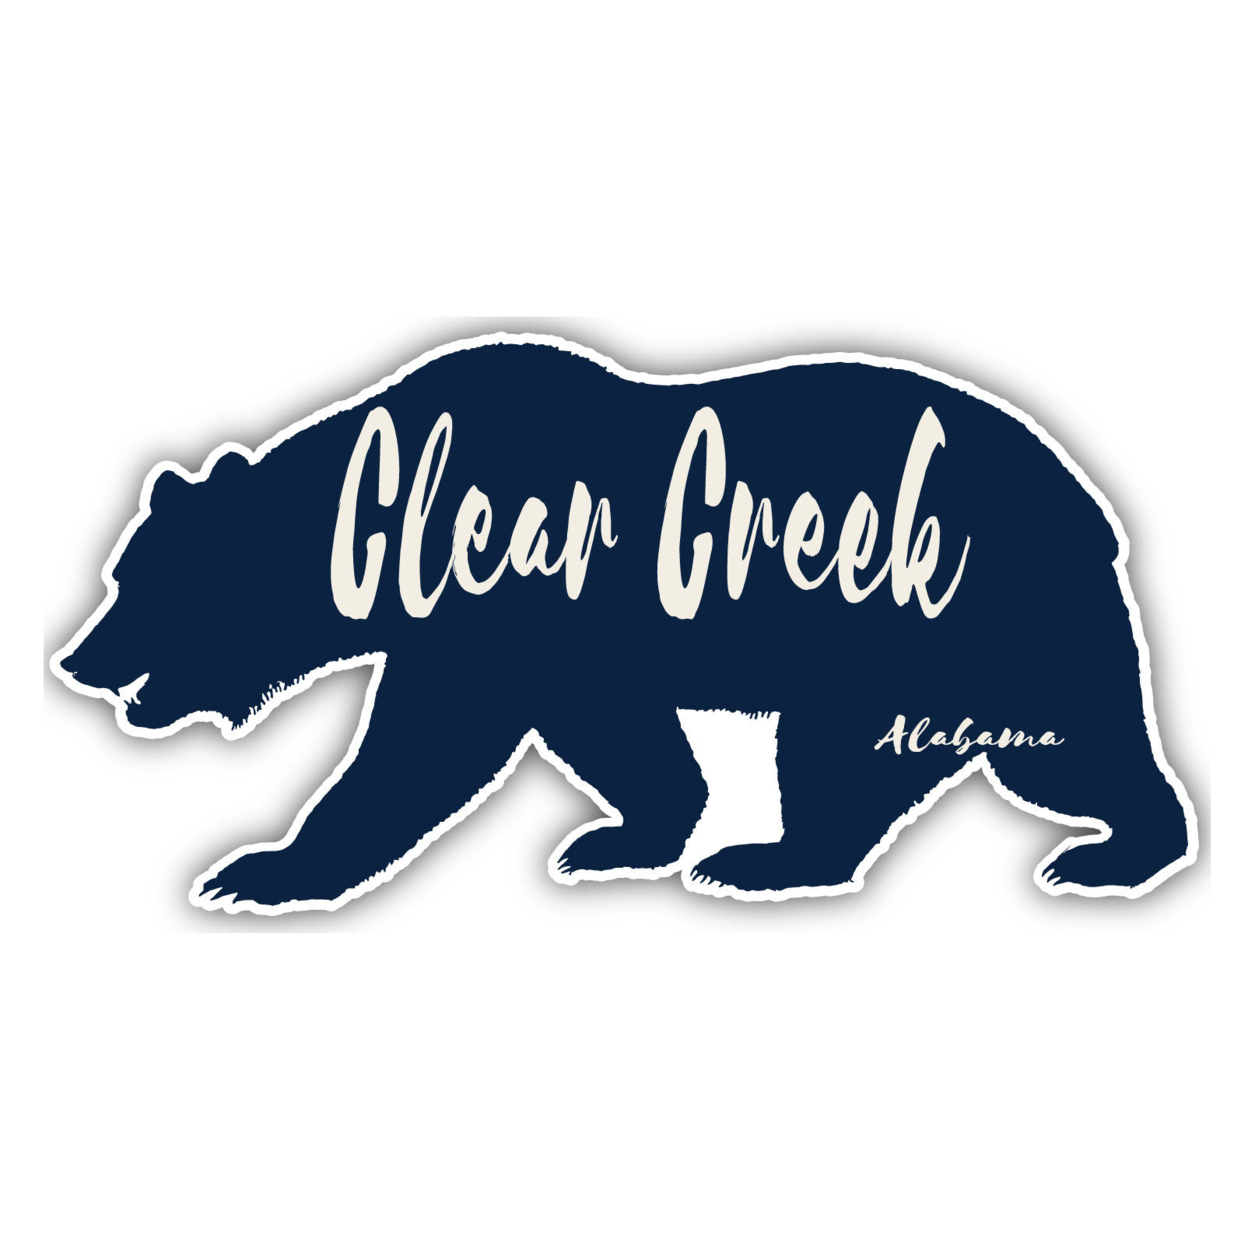 Clear Creek Alabama Souvenir Decorative Stickers (Choose Theme And Size) - Single Unit, 6-Inch, Tent